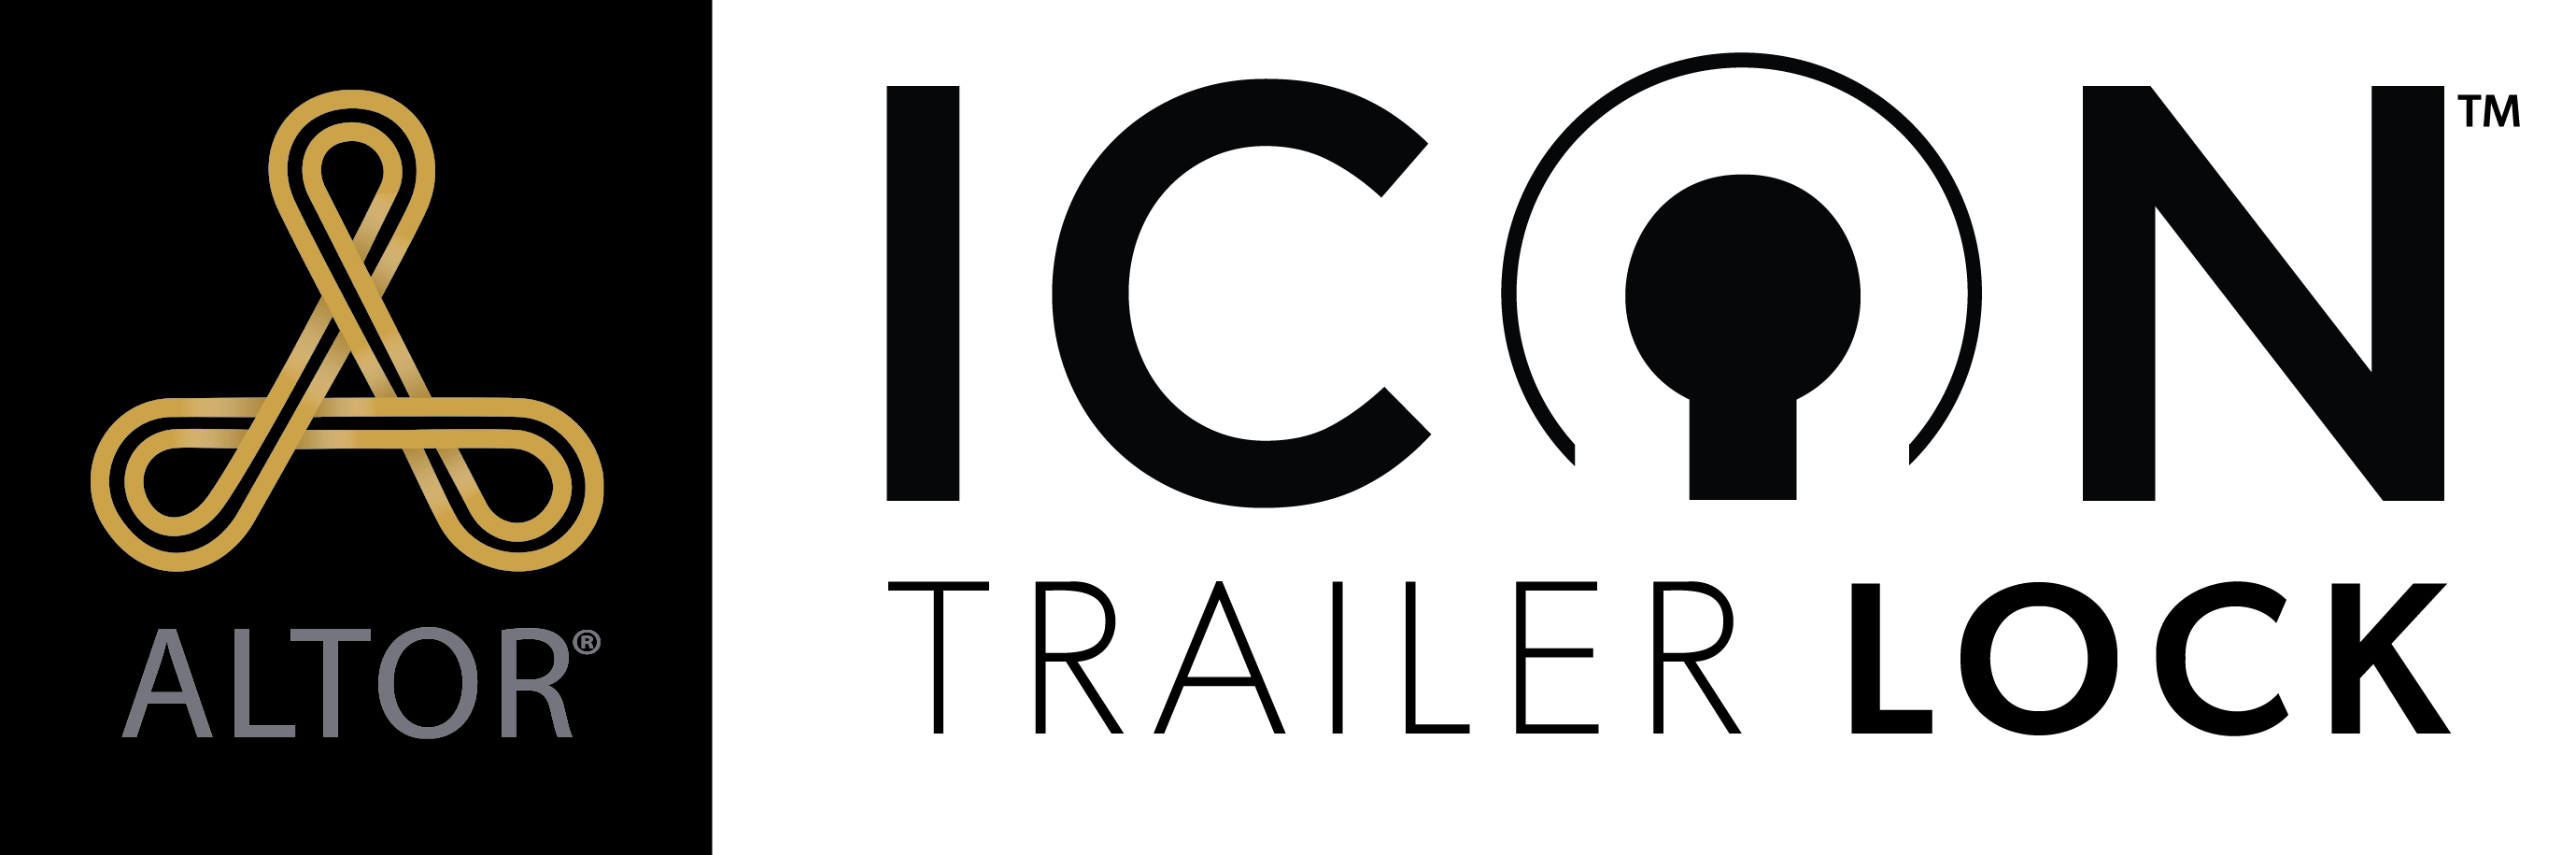 ALTOR ICON TL H logo -kblock.png